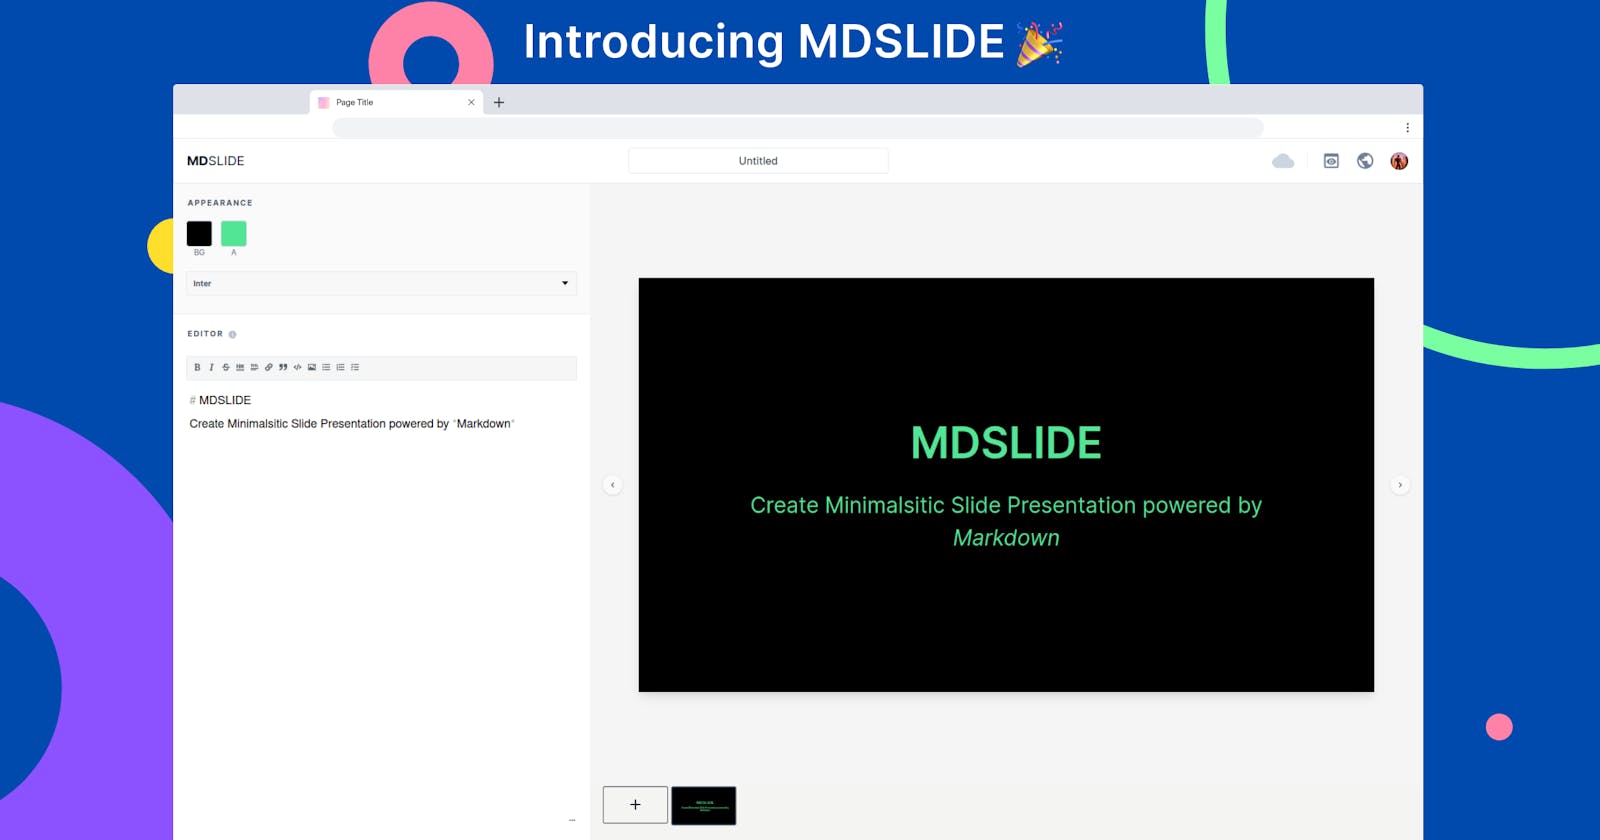 Introducing MDSLIDE - Create Minimalistic Slide Presentations powered by Markdown. 🚀